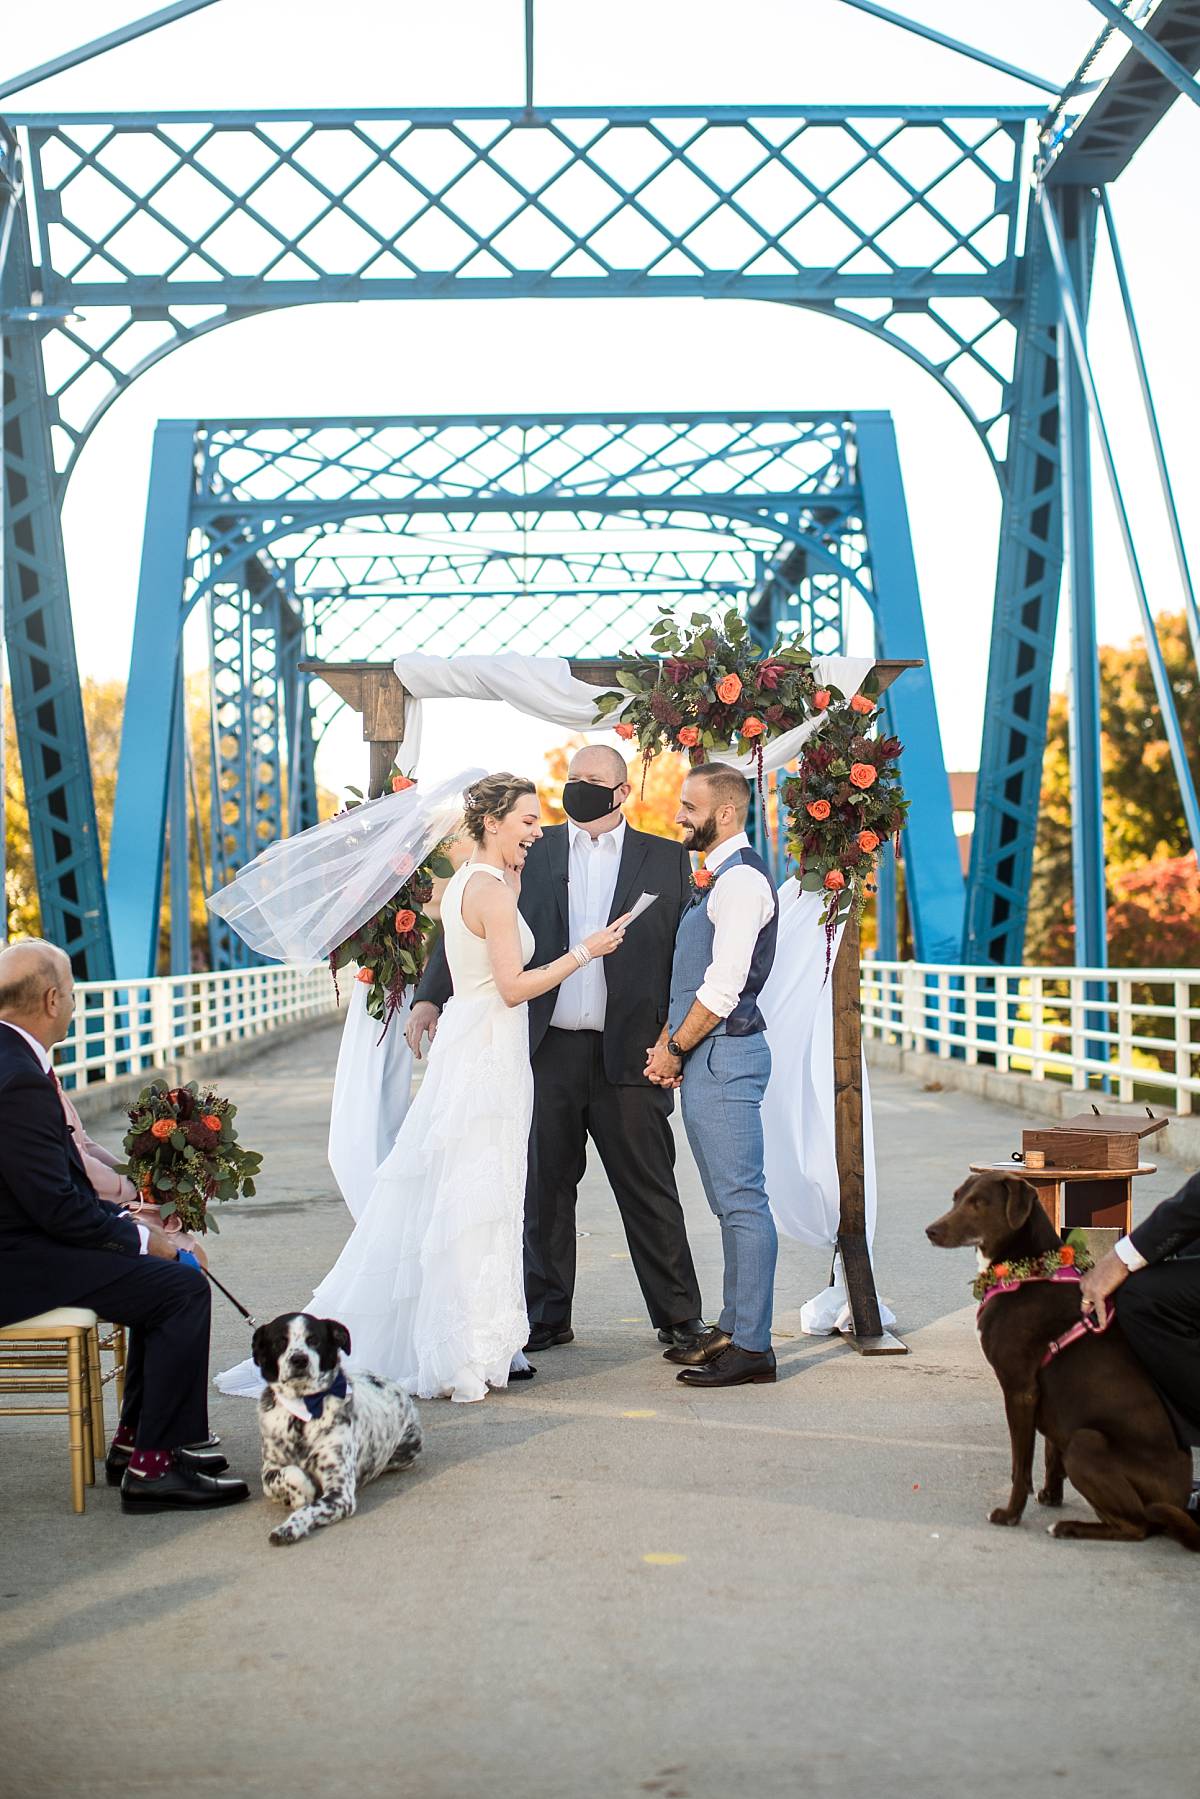 Micro wedding ceremony at the Grand Rapids Blue Bridge